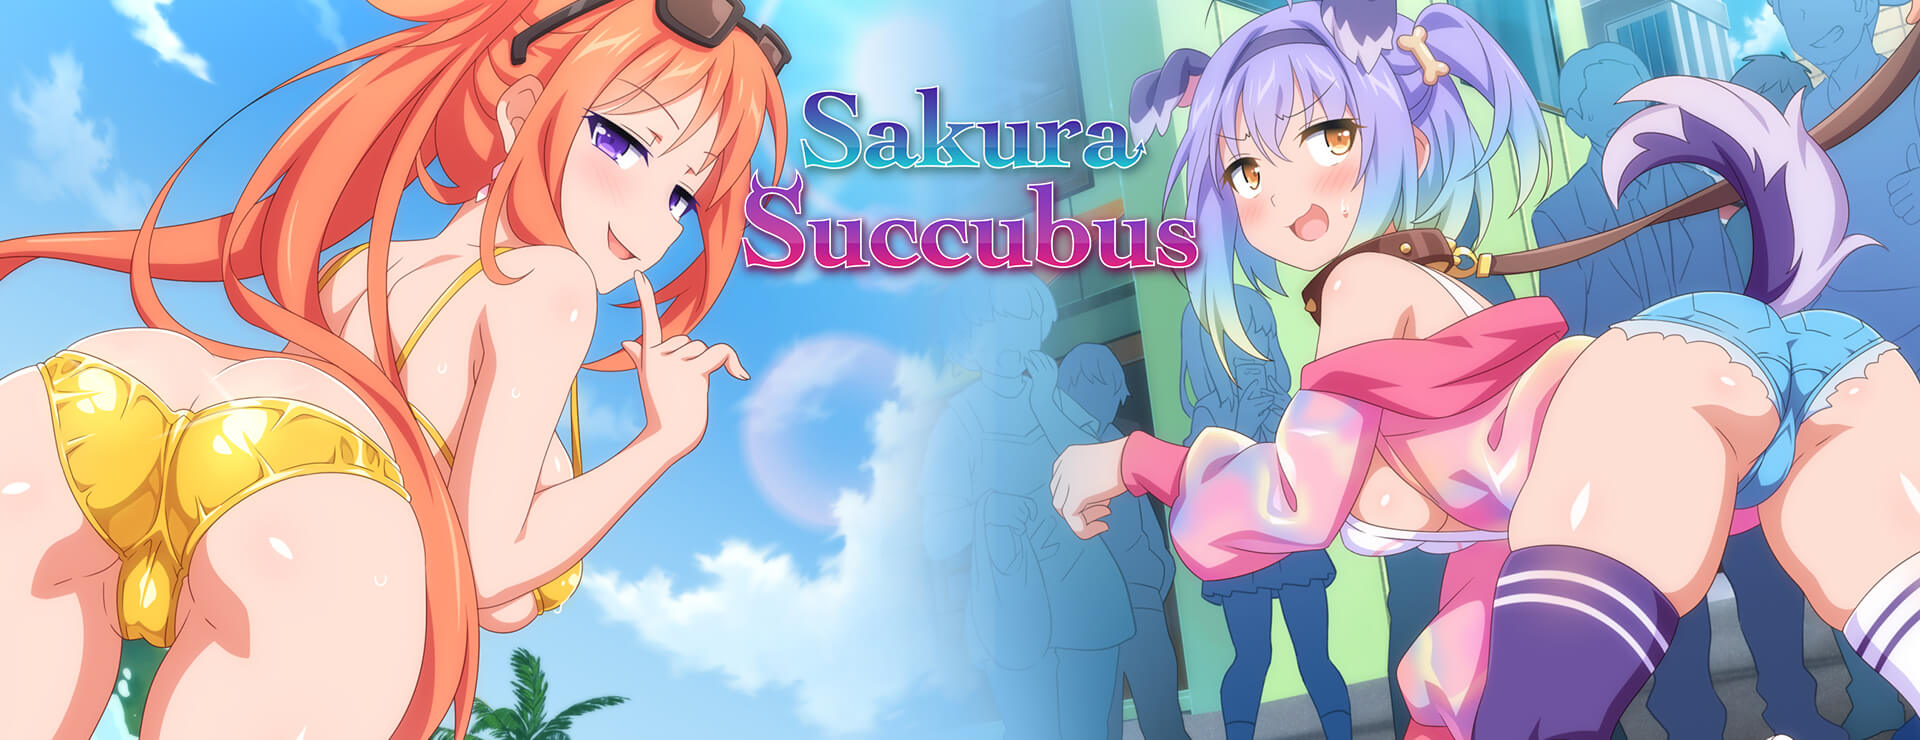 Sakura Succubus - ビジュアルノベル ゲーム